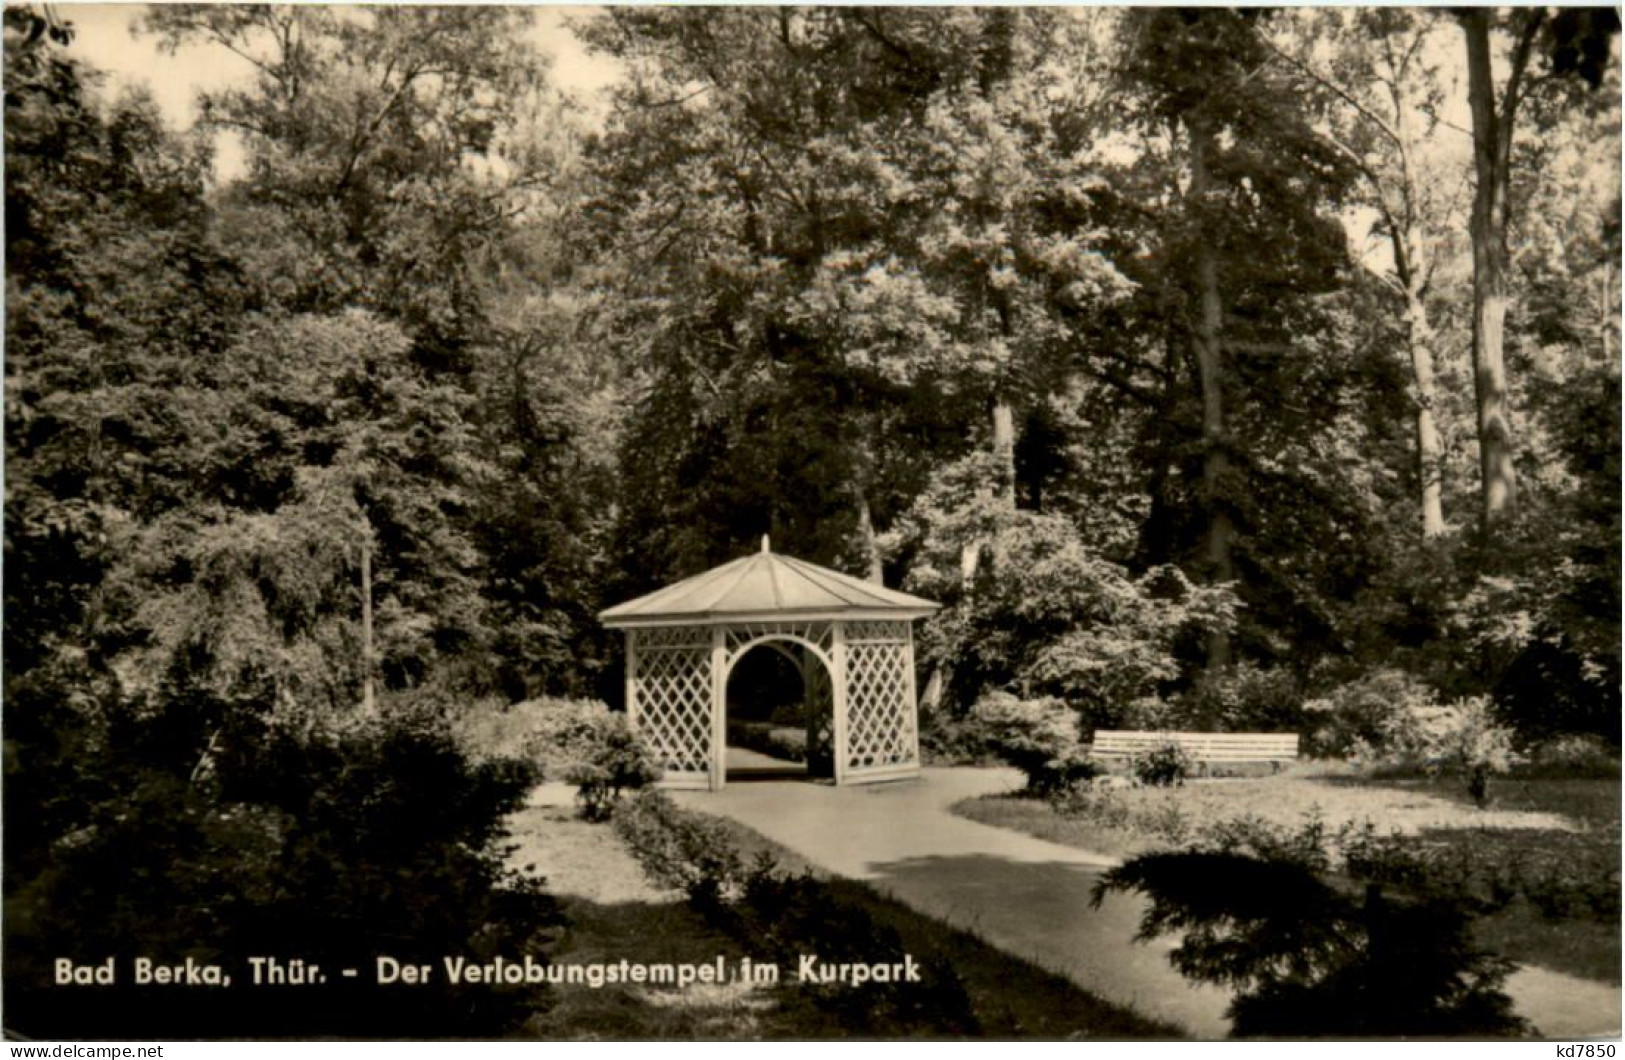 Bad Berka, Der Verlobungstempel Im Kurpark - Weimar